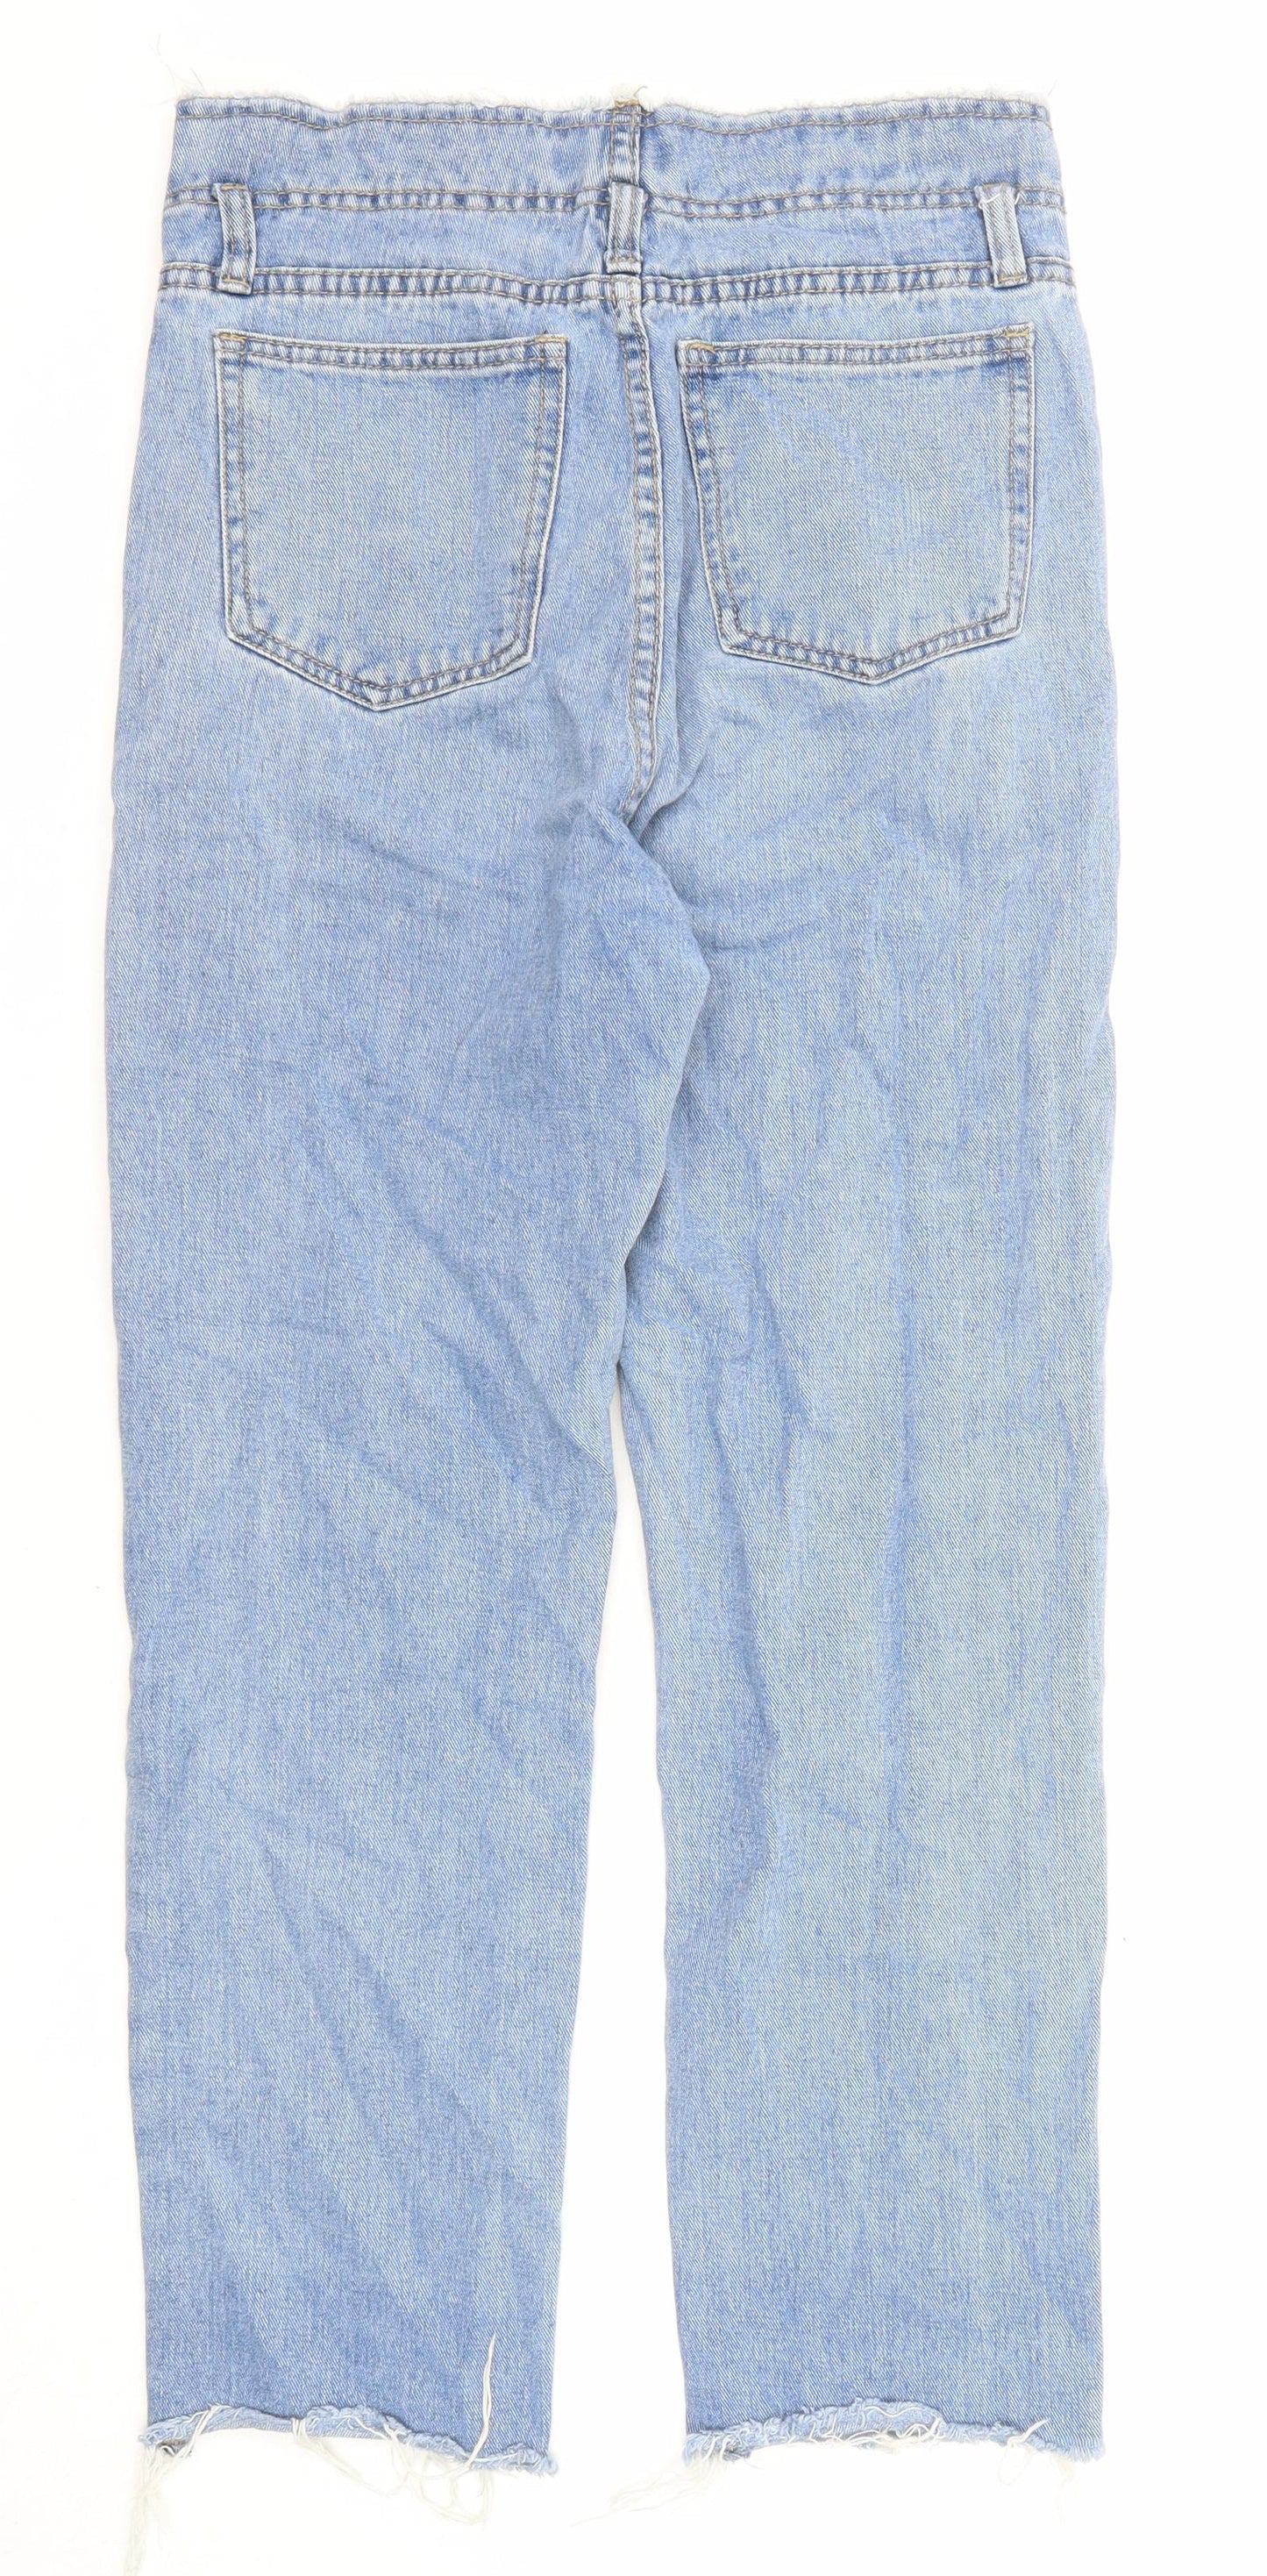 Momokrom Womens Blue Cotton Straight Jeans Size 8 L24 in Regular Zip - Raw Hems